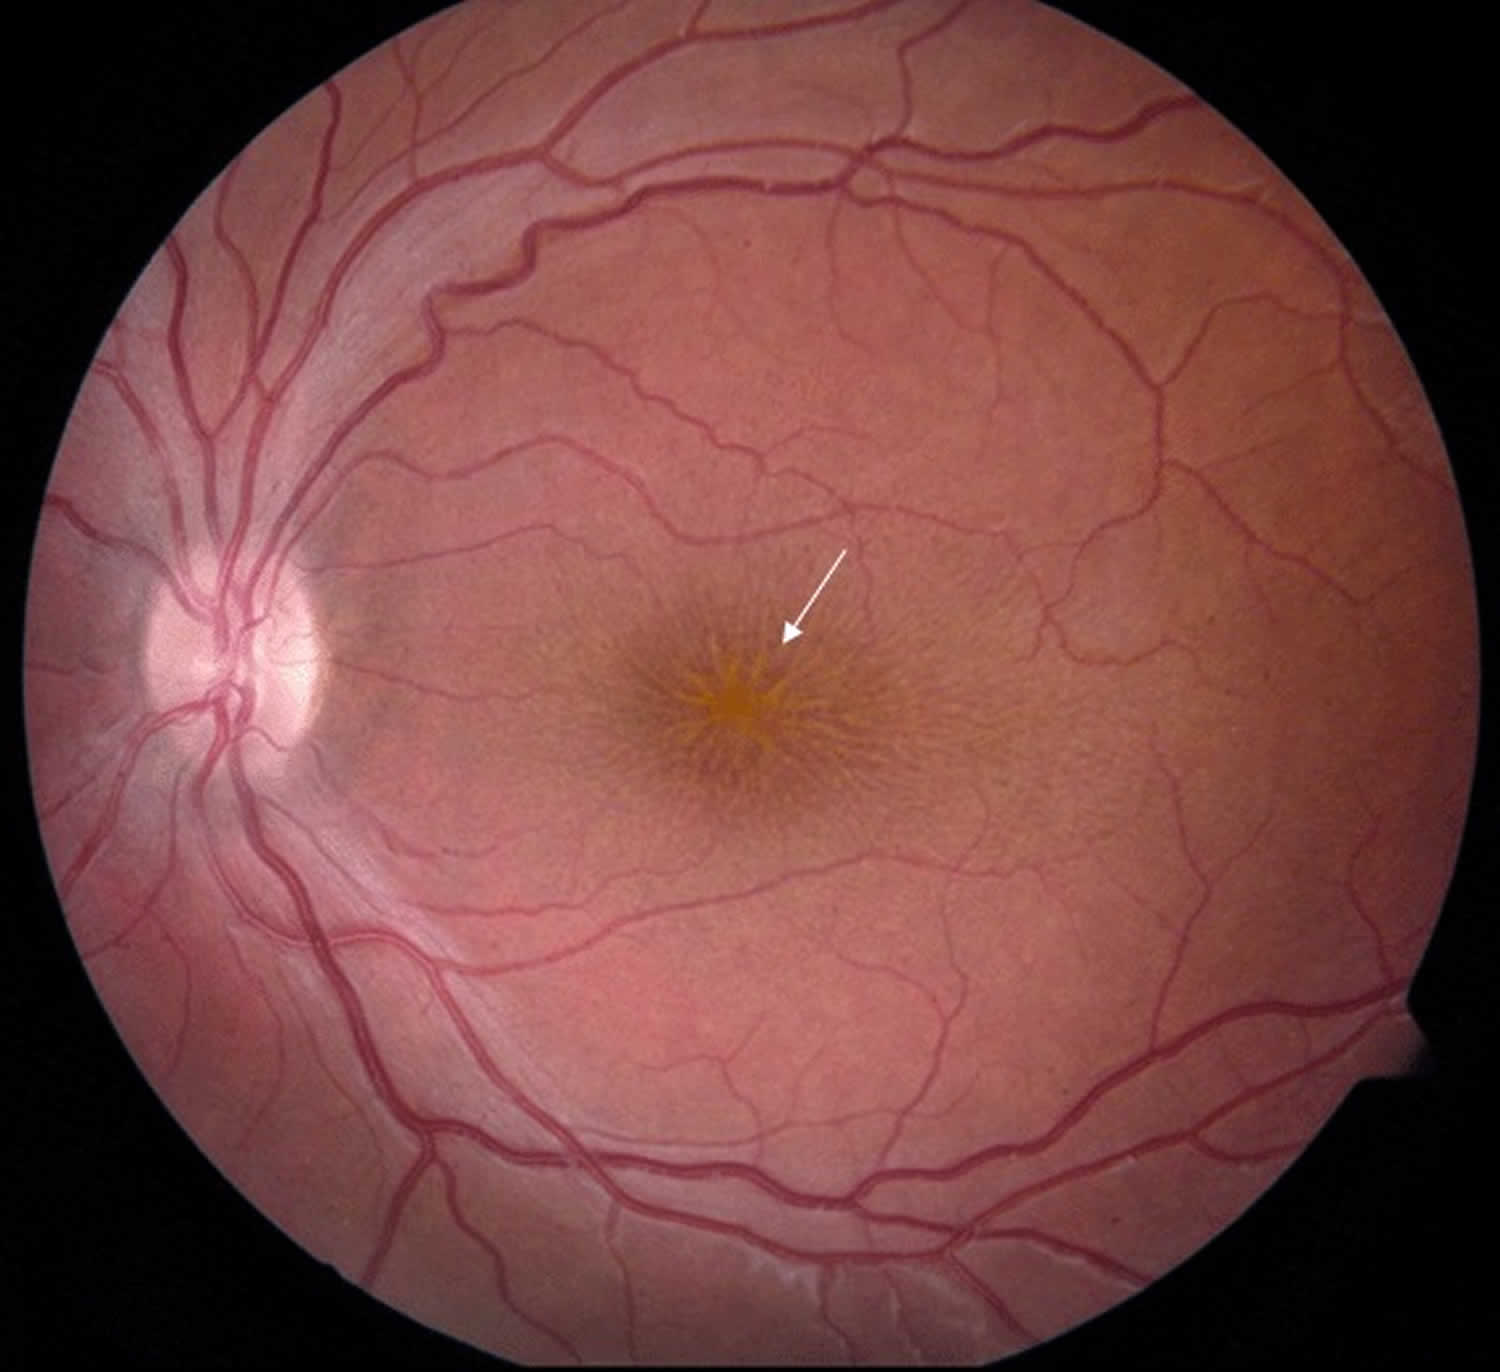 X-linked juvenile retinoschisis